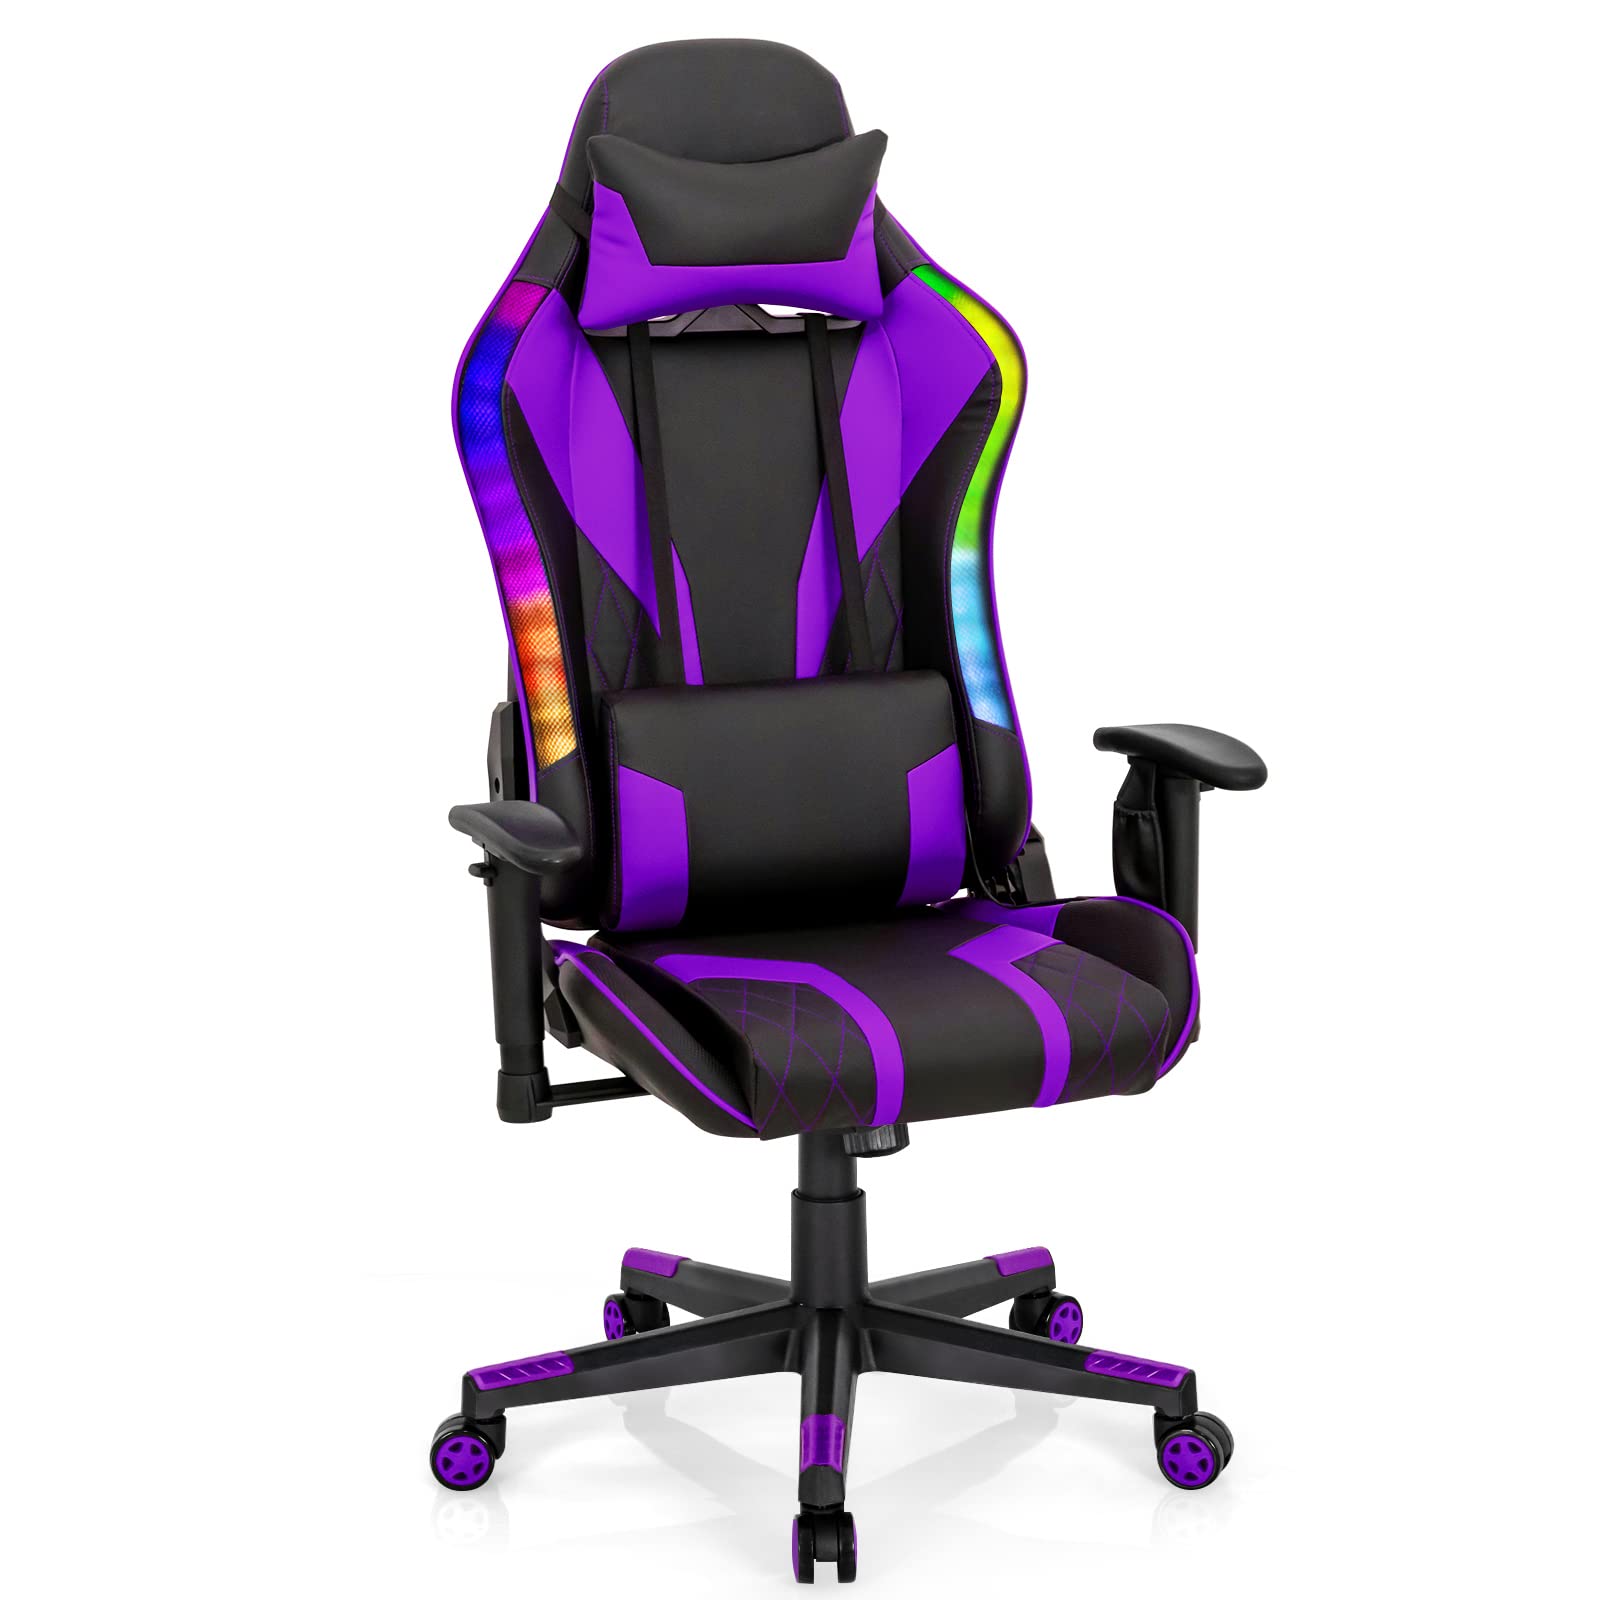 Giantex Gaming Chair with RGB LED Lights, Purple